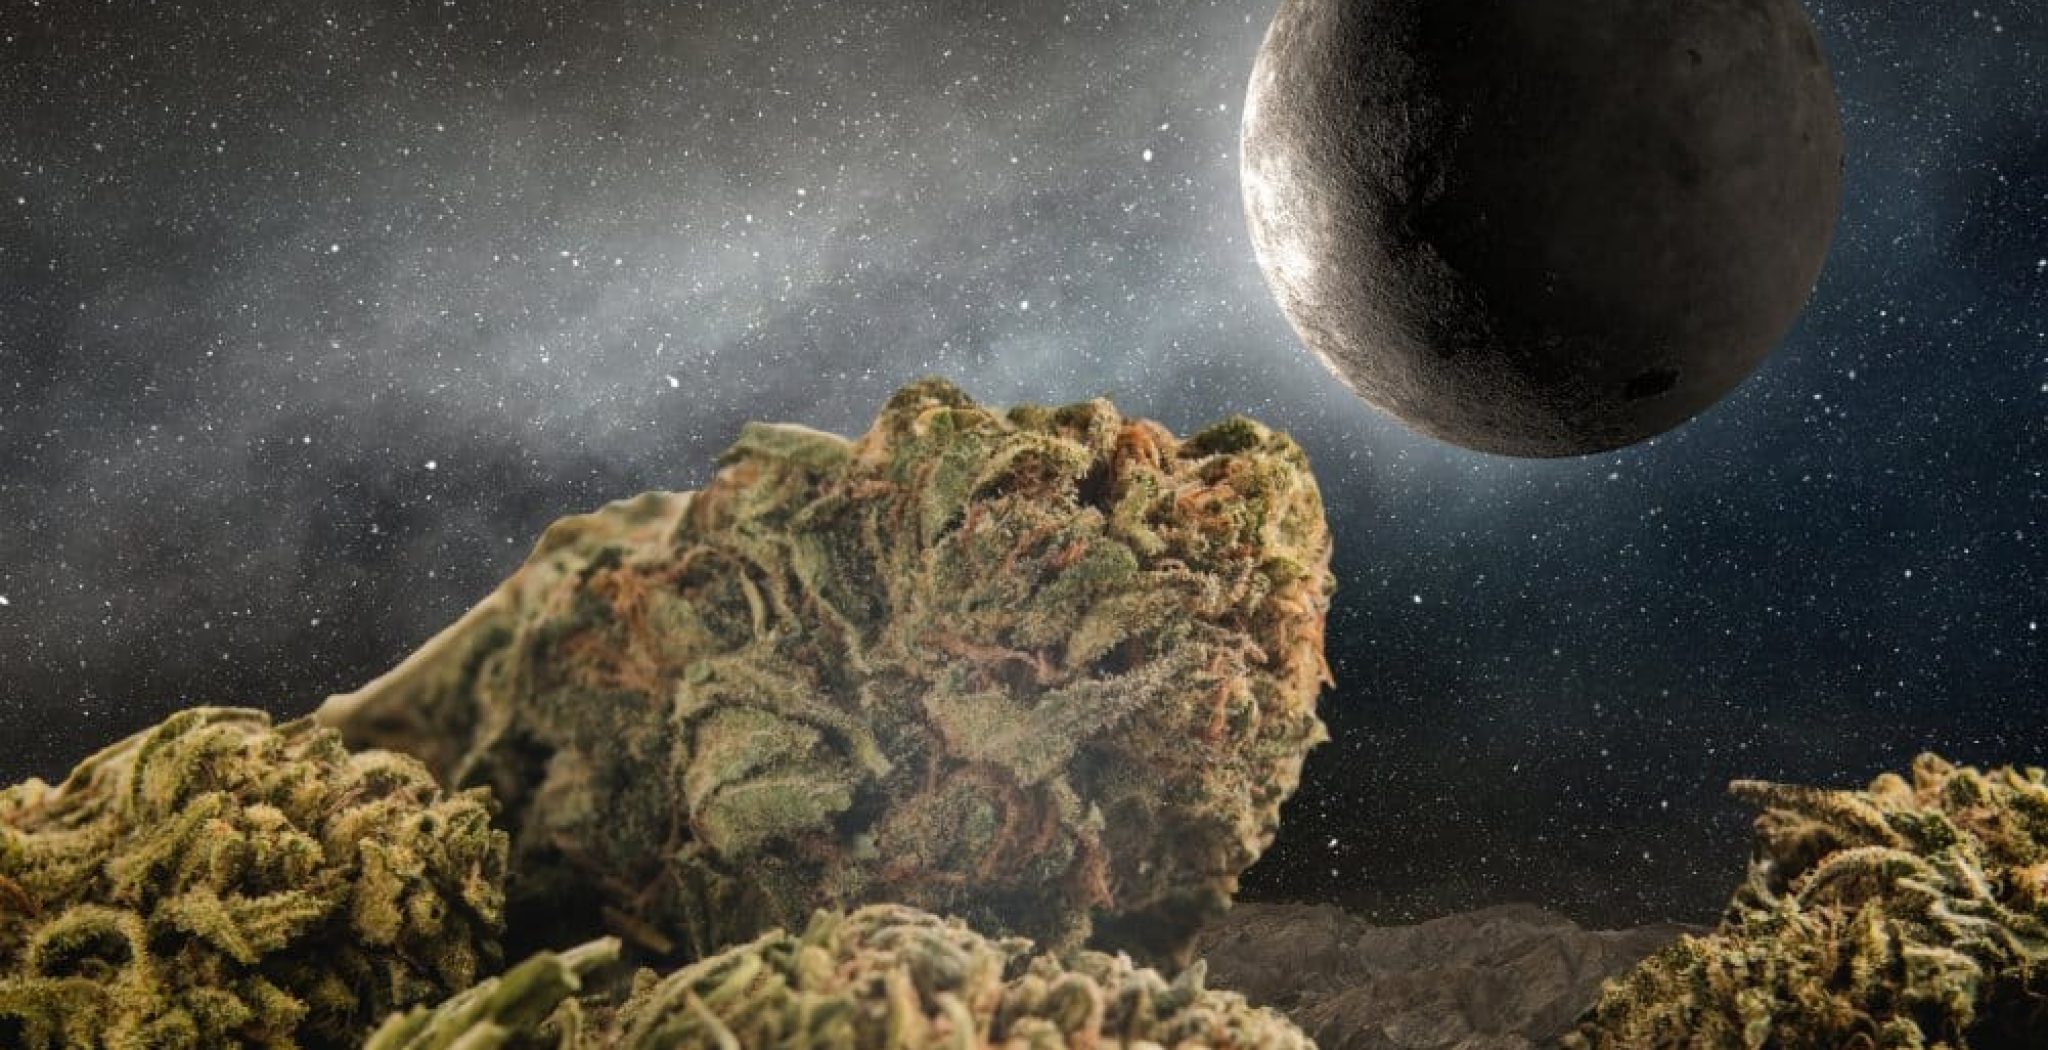 image of Marijuana buds on a lunar landscape